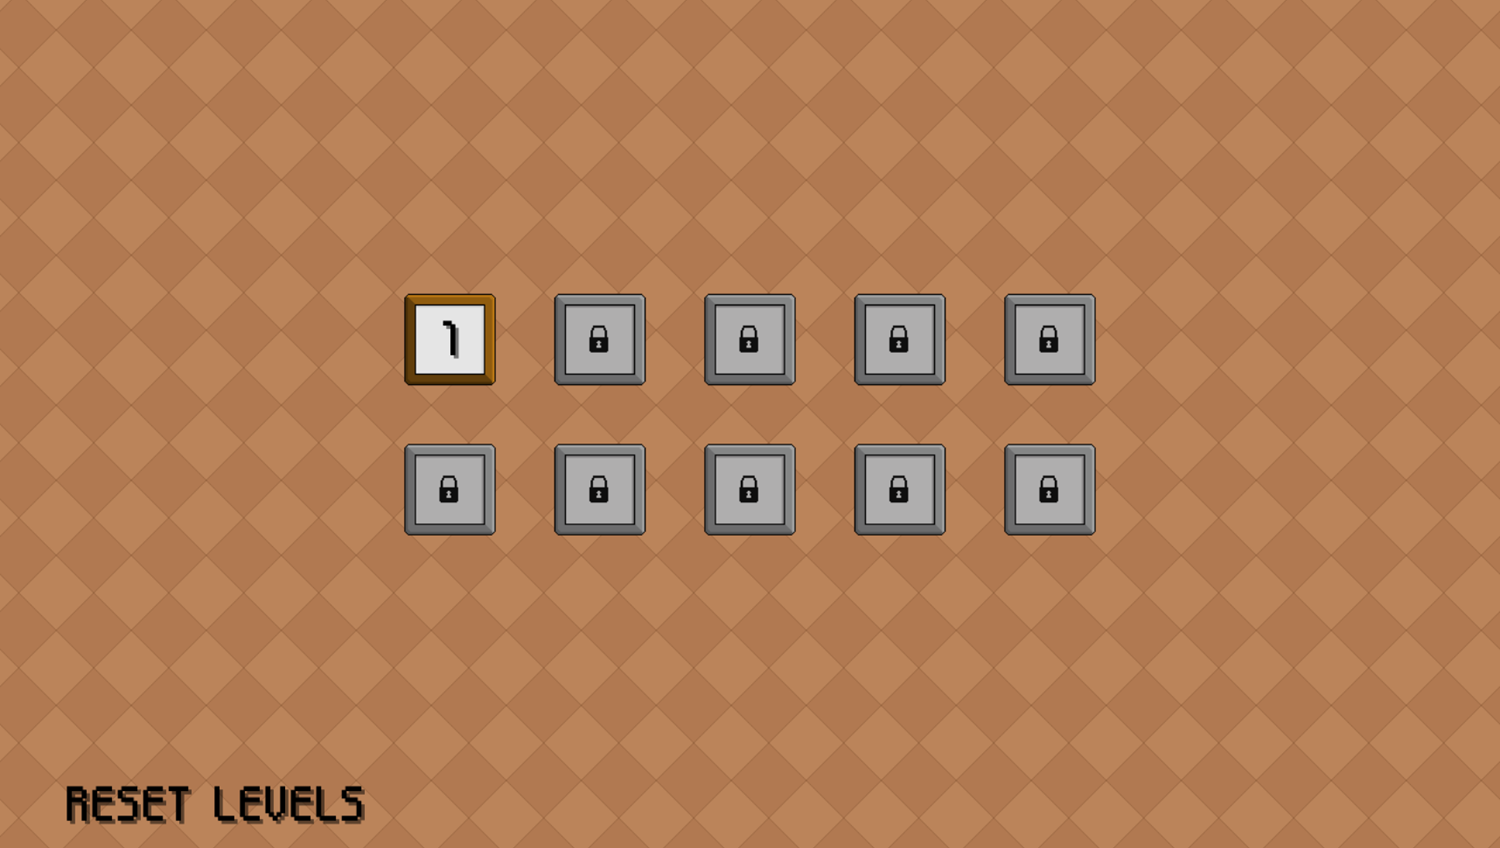 Maze Shadow Game Level Select Screenshot.